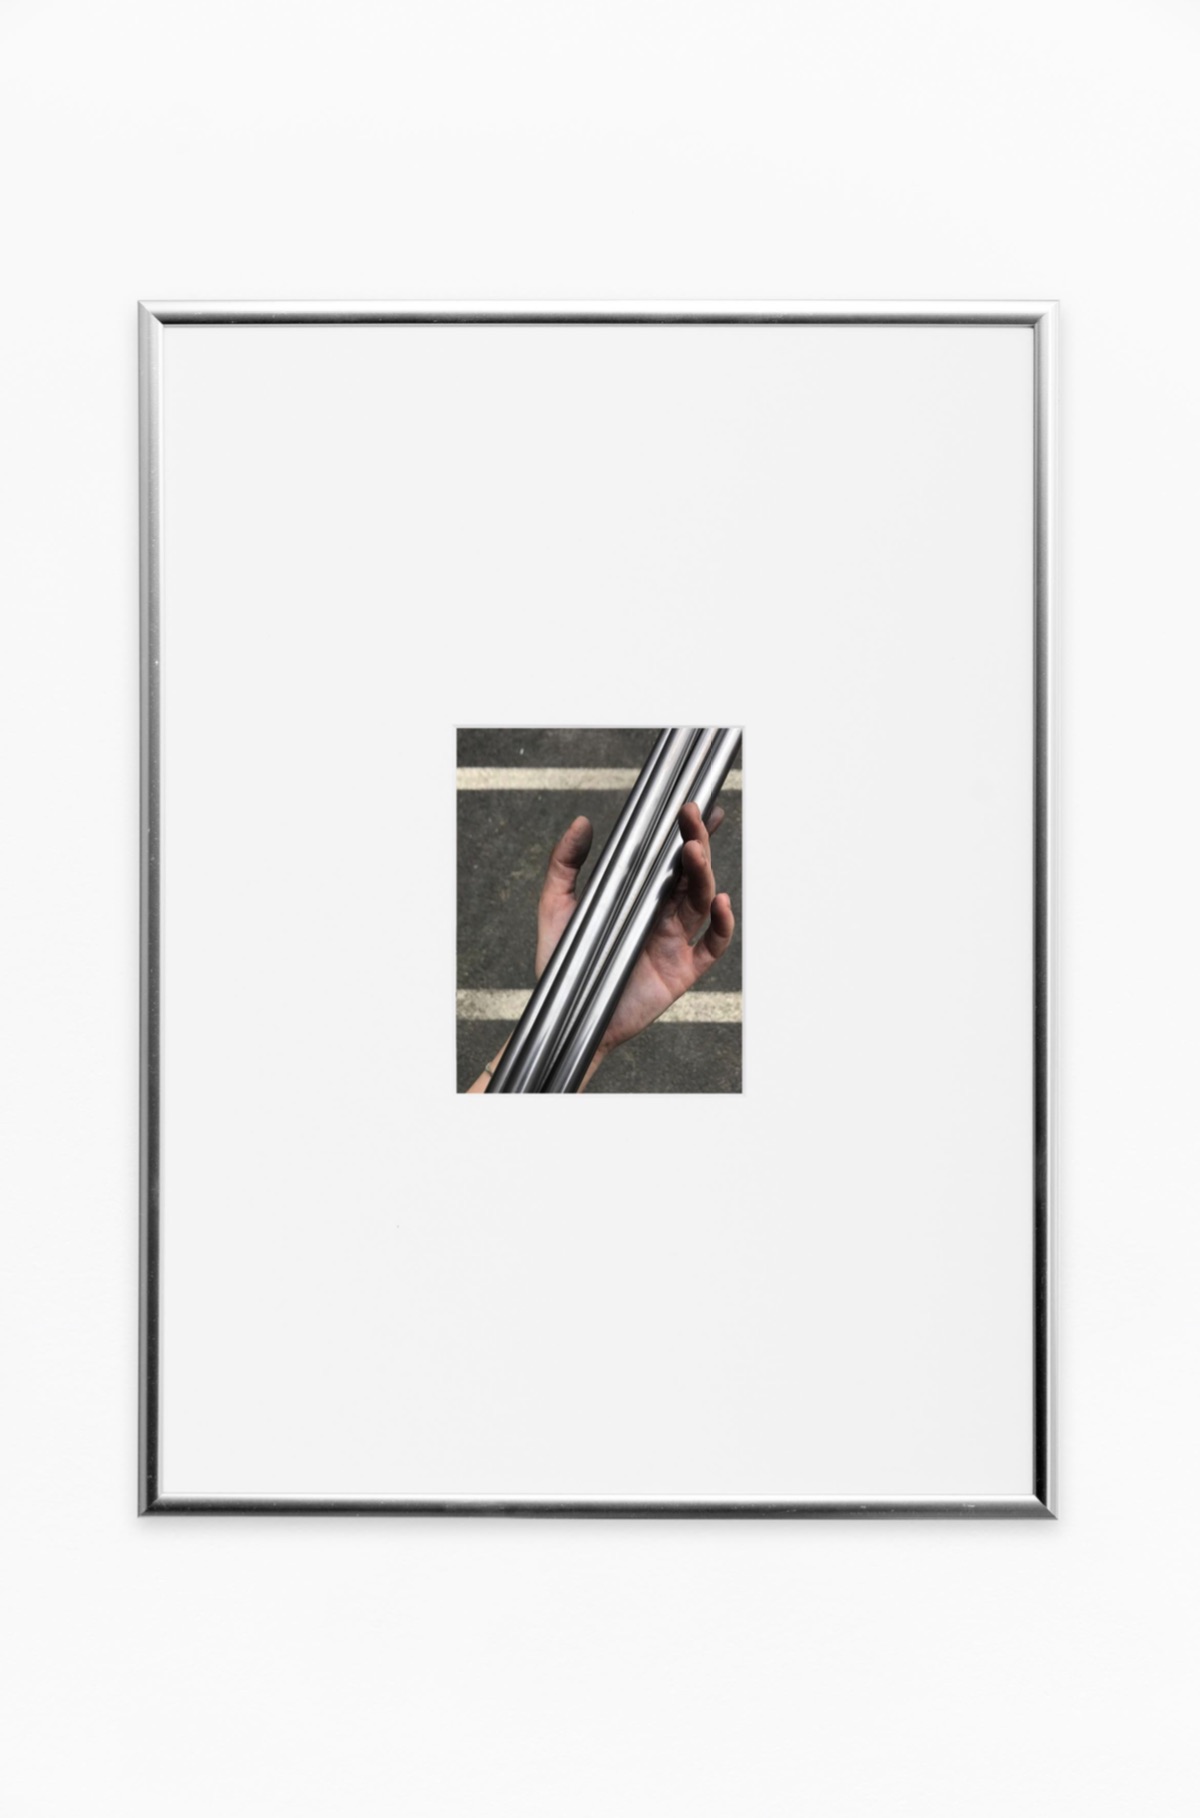 Caress, 2018, C-print on baryta Hahnemülhe paper, silver aluminium frame Cm. 12,5 x 10 (print); cm. 40 x 30 (frame)